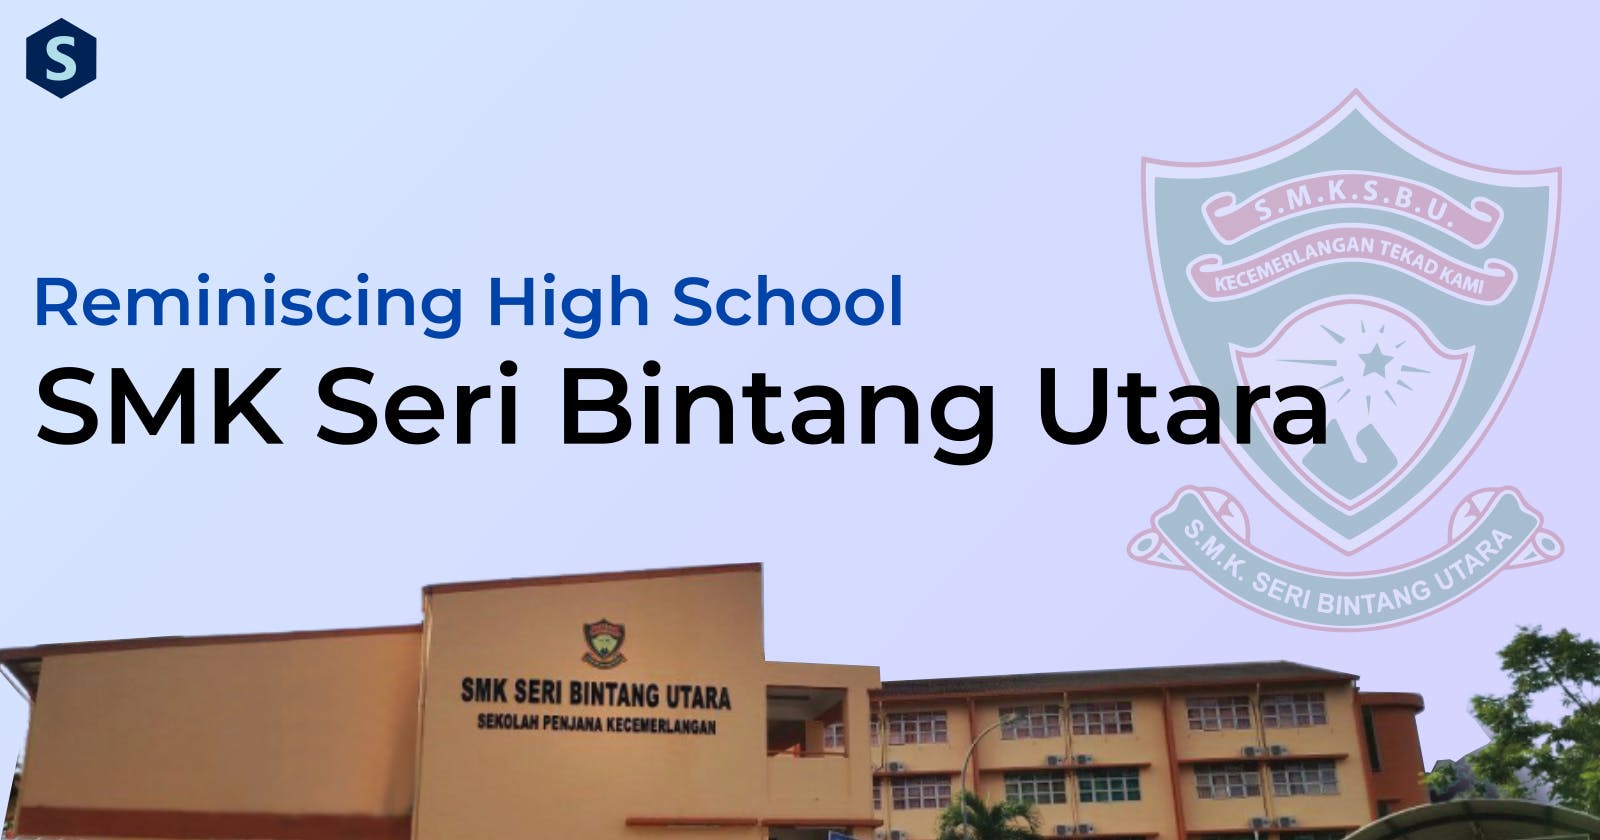 Reminiscing High School: SMK Seri Bintang Utara